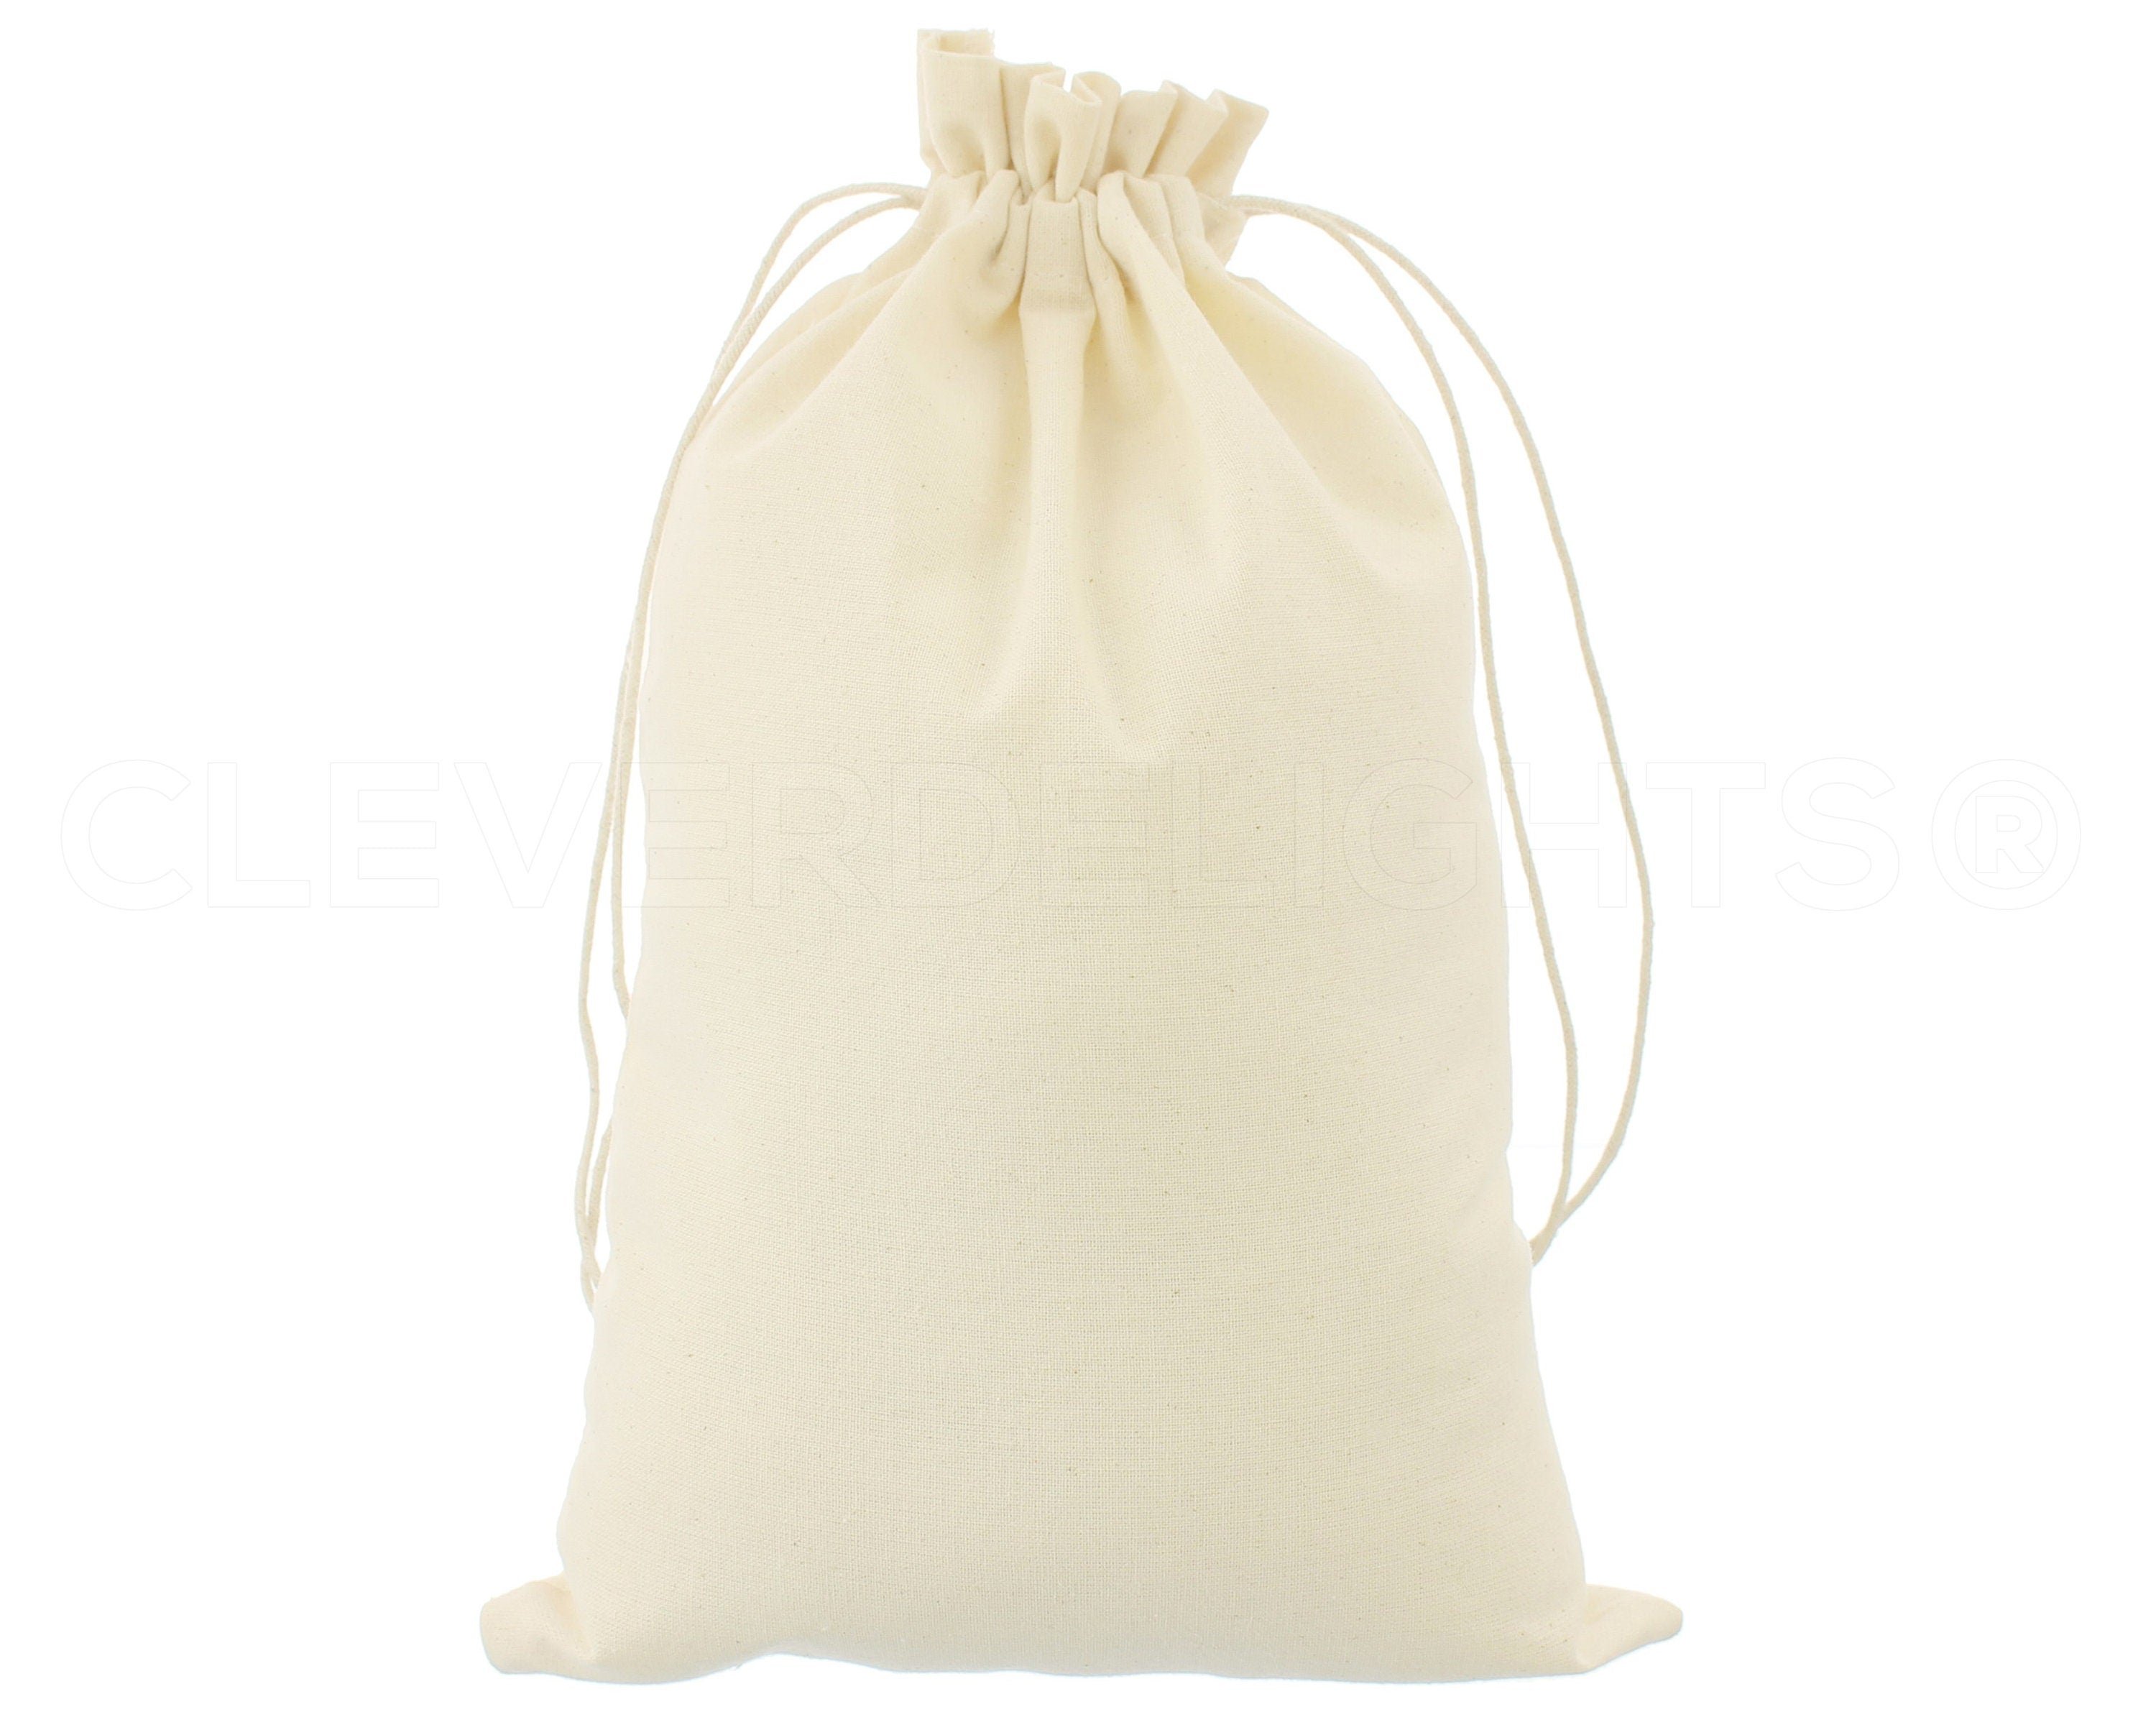 10 x 12 Inches 100% Cotton Single Drawstring Premium Quality Muslin Bags